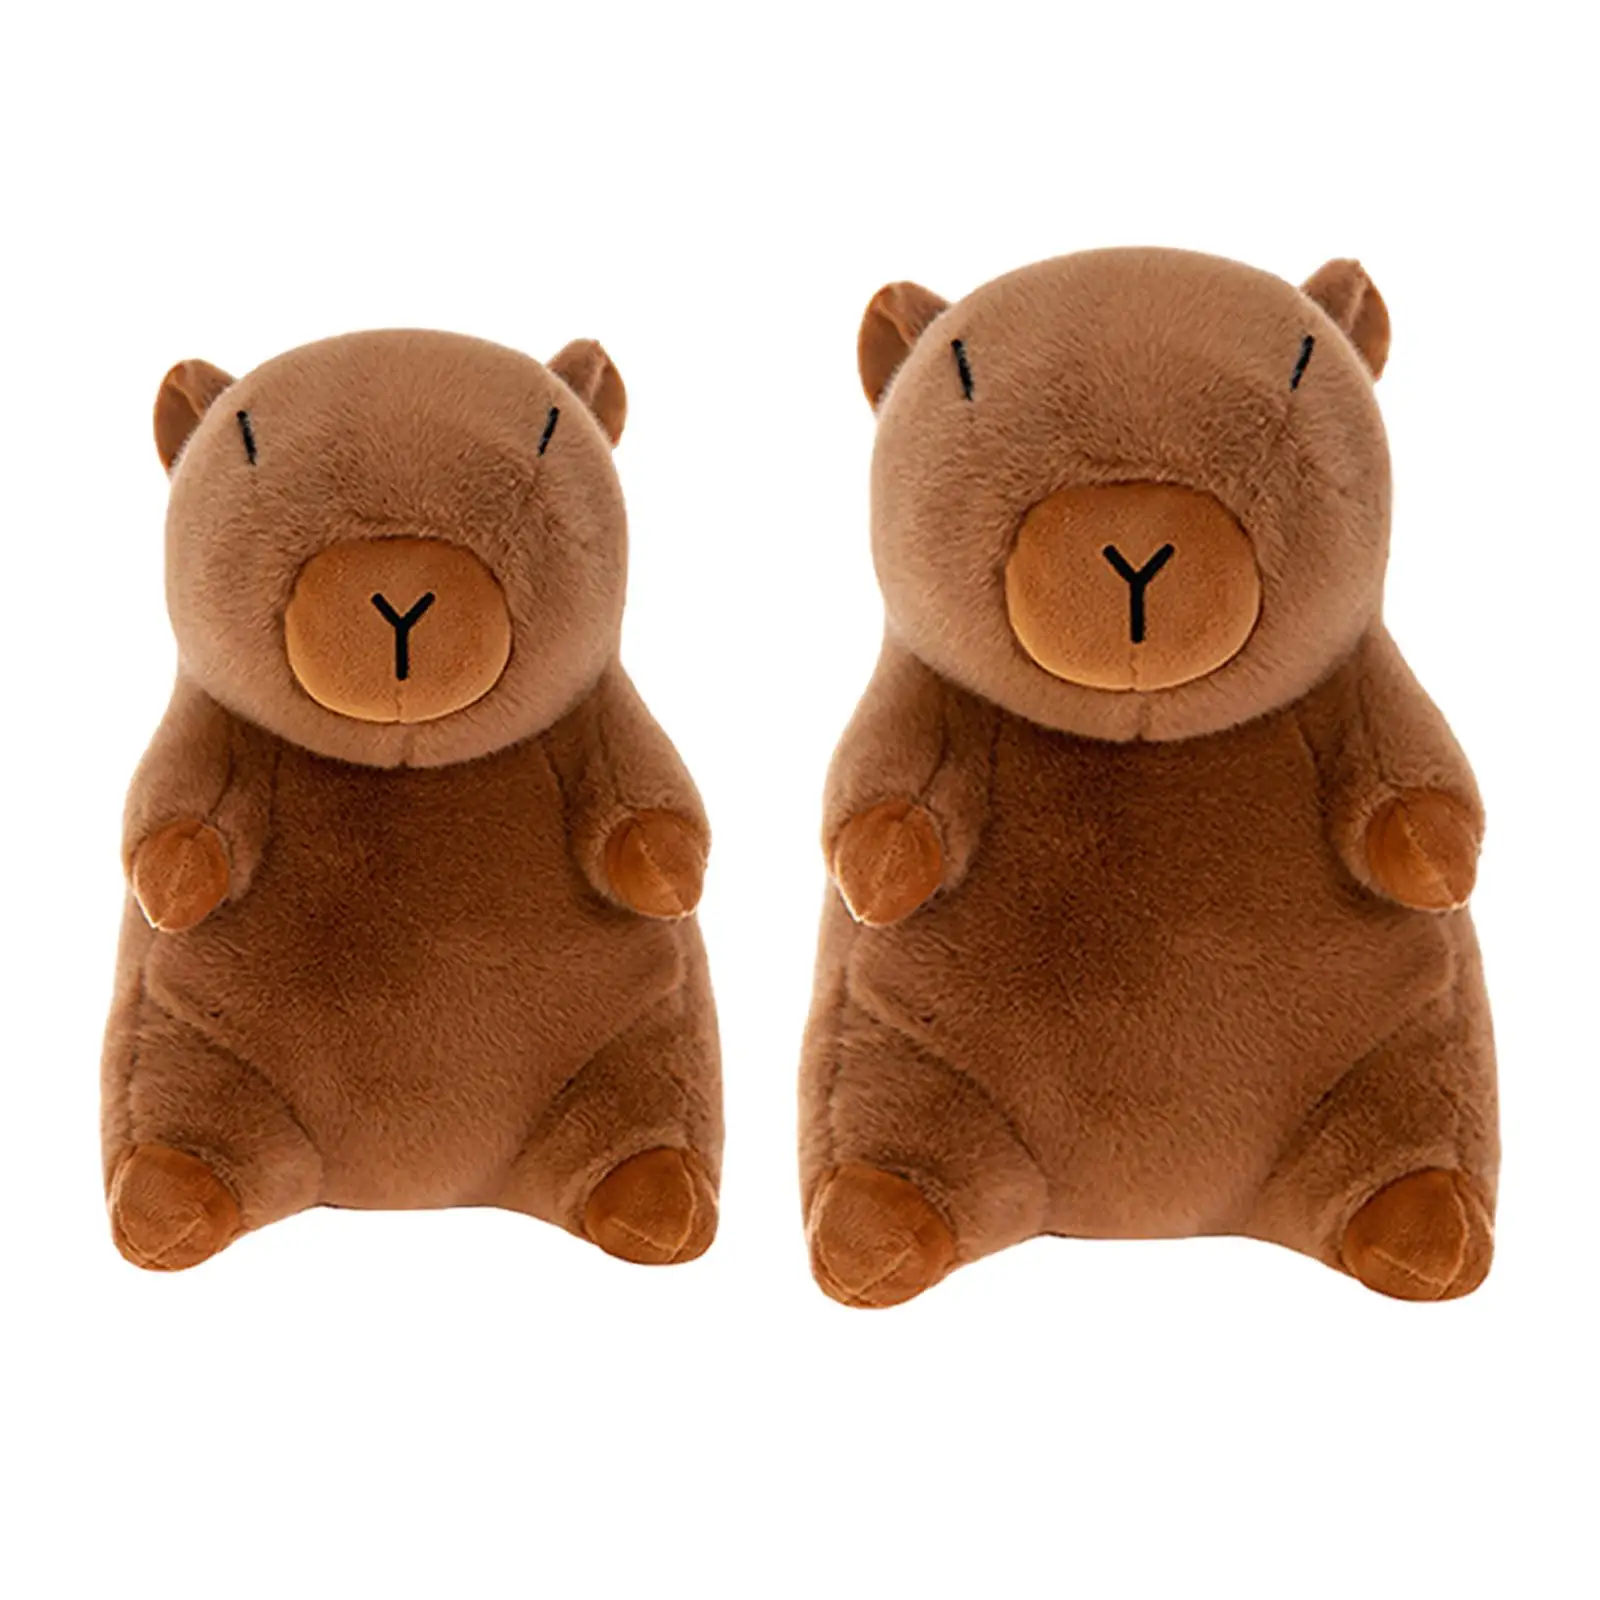 

Capybara Plush Toy Soft Cartoon Plush Animal Home Decor Realistic Plush Capybara Doll for Adults Children Birthday Gifts Family